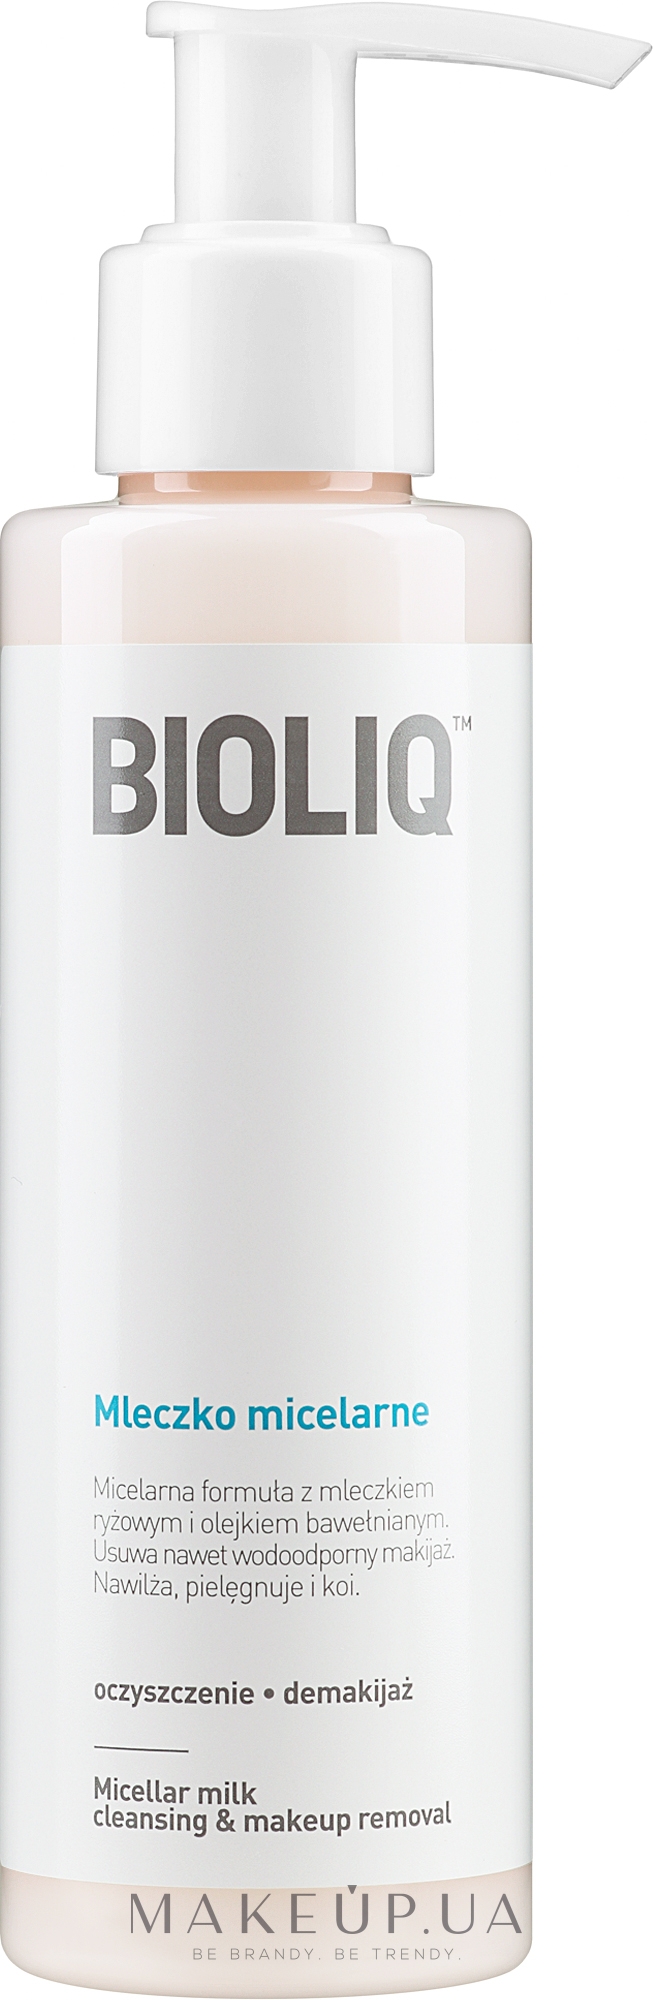 Мицеллярное молочко для чищения и демакияжа - Bioliq Clean Micellar Milk — фото 135ml